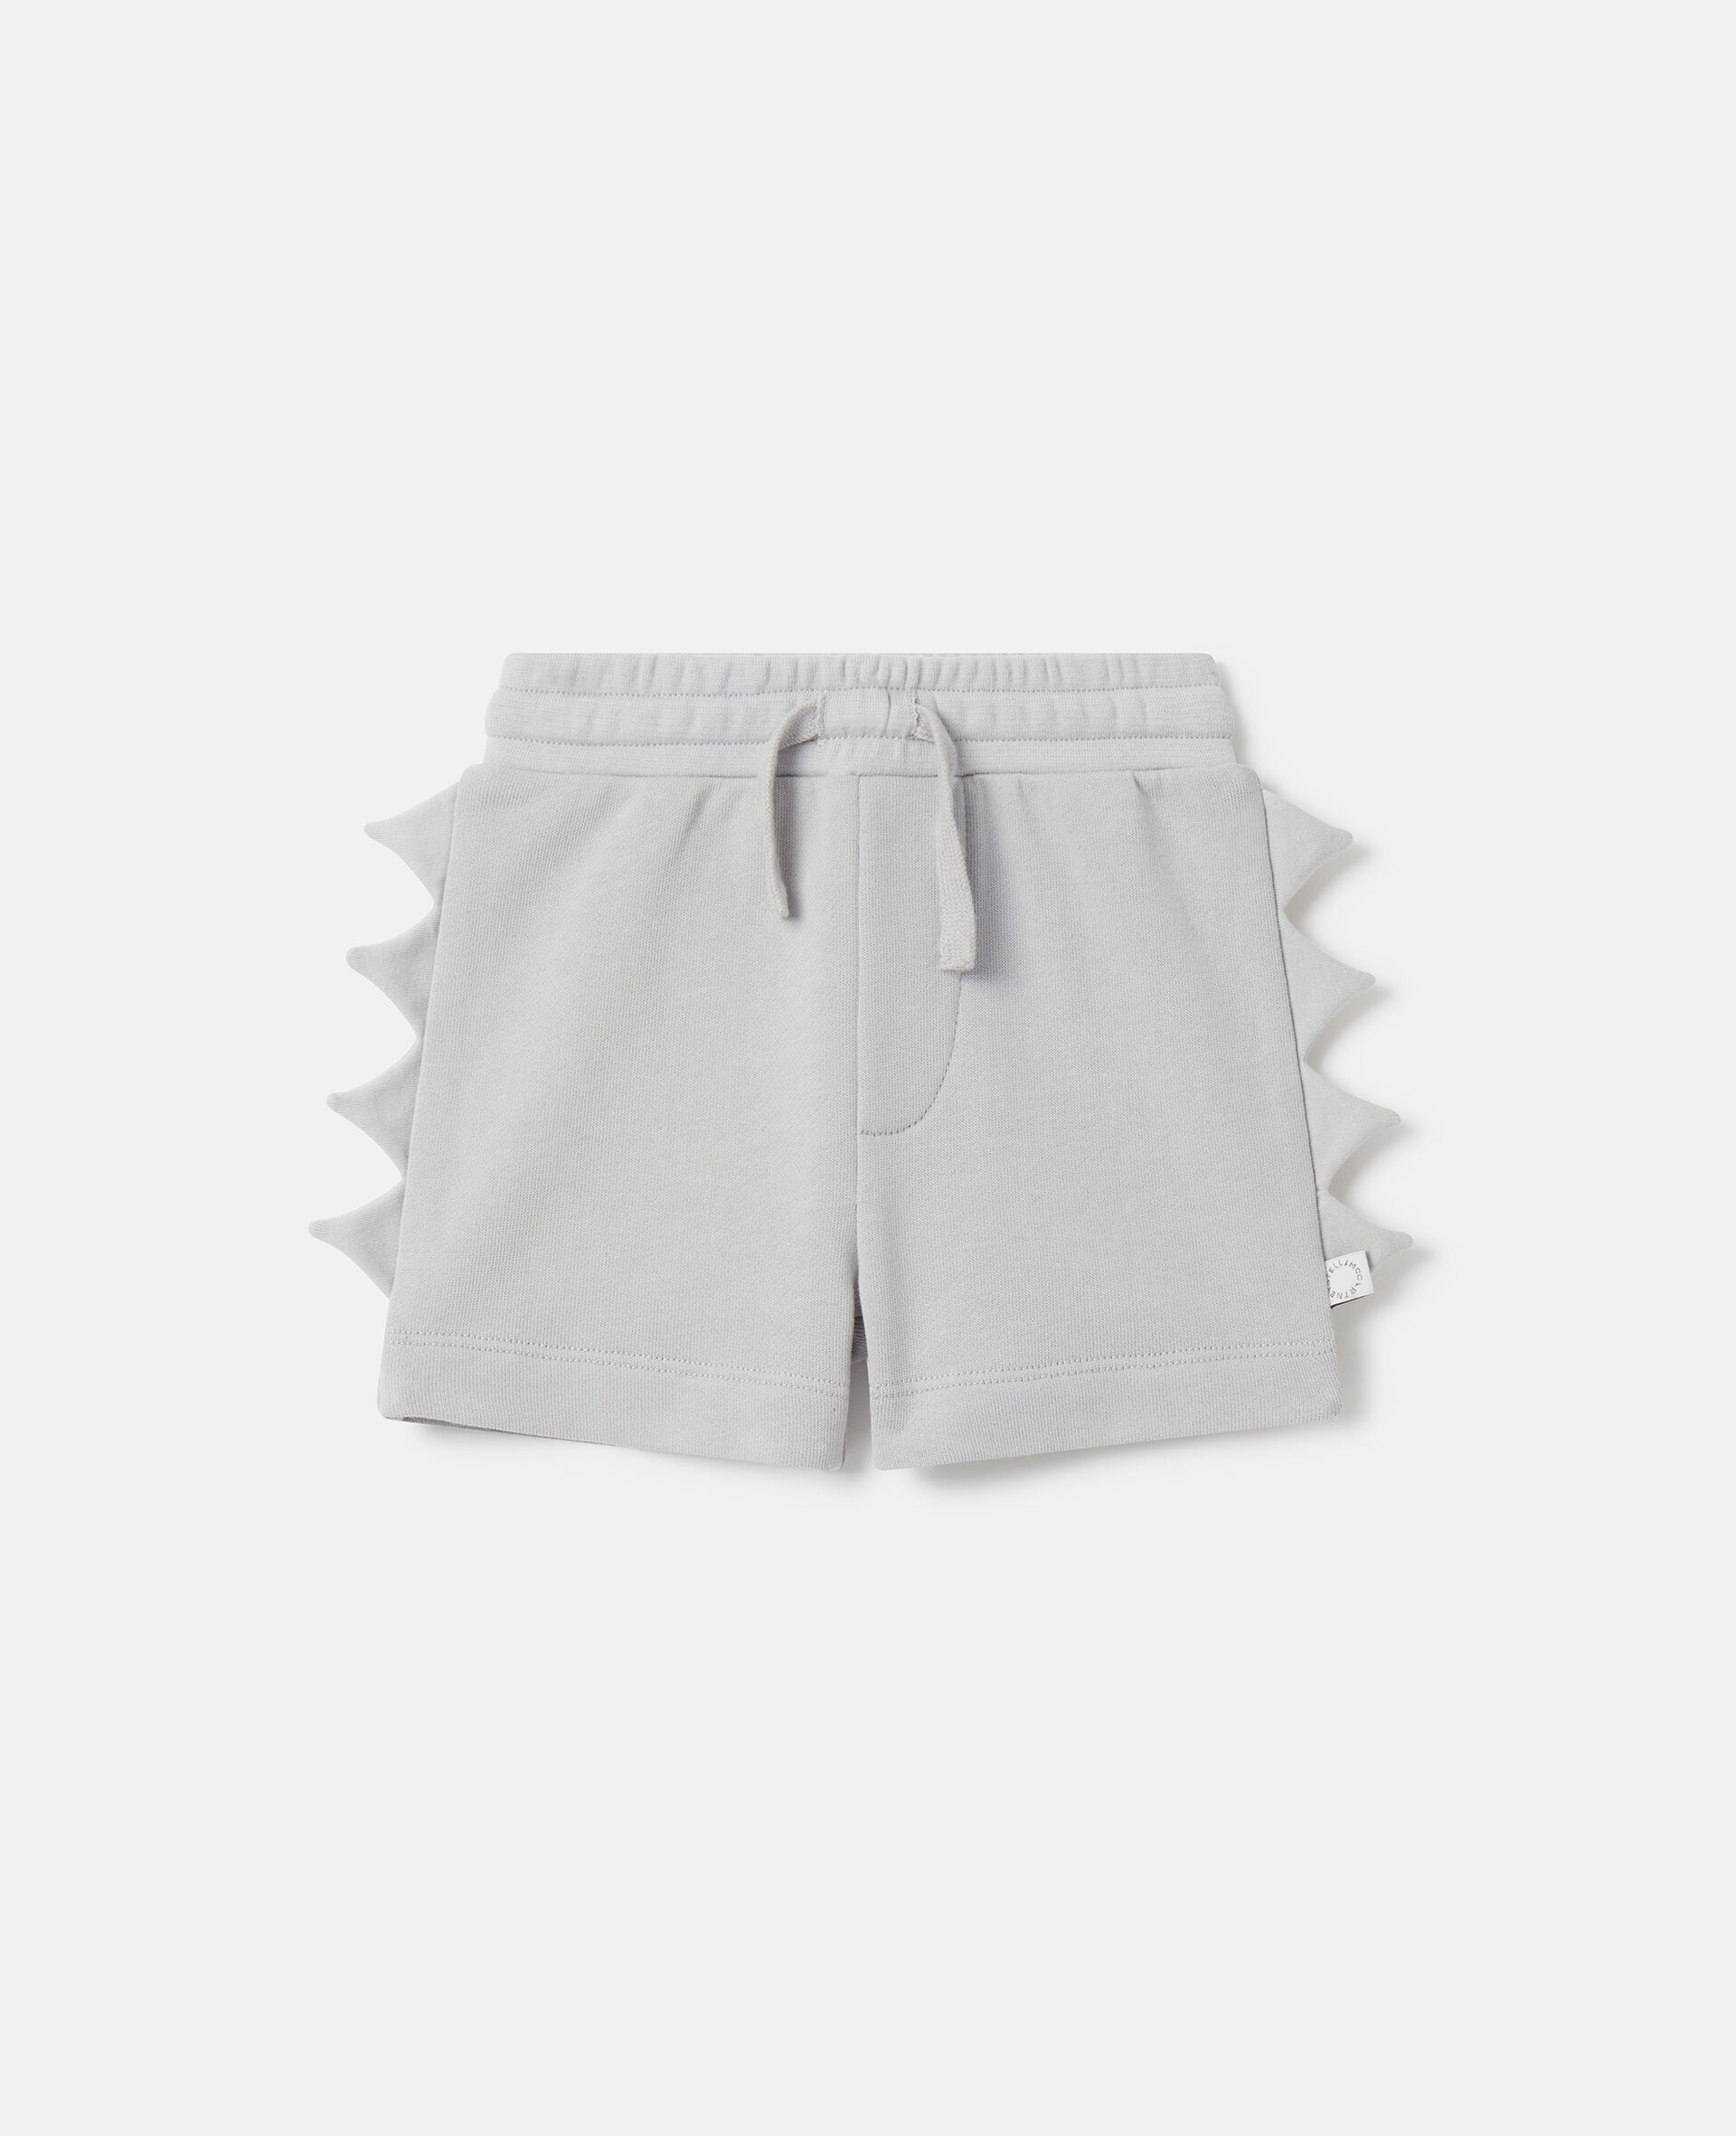 Shark Fin Spike Shorts-Grau-medium